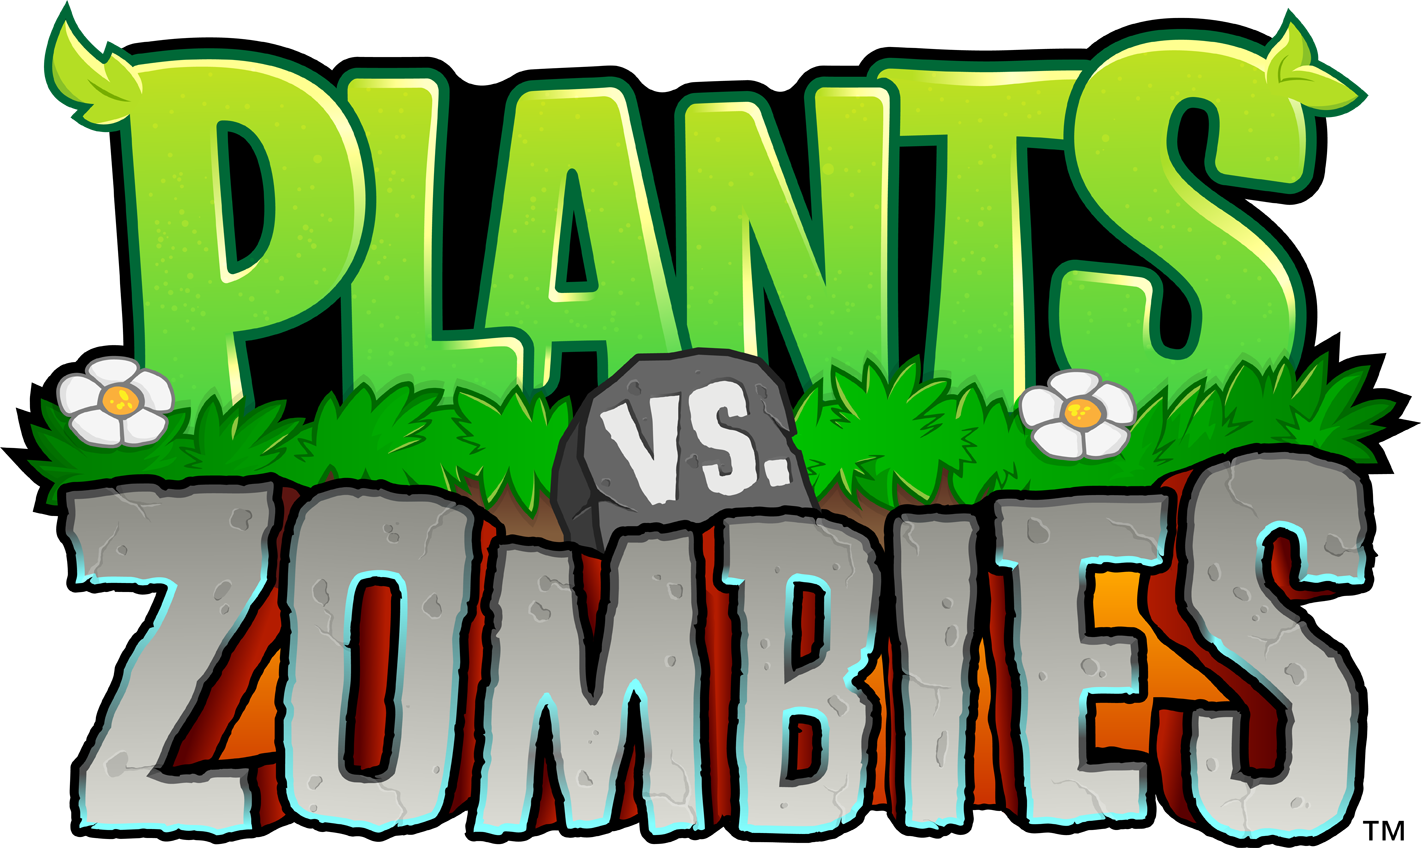 Plants vs. Zombies (series). Plants vs. Zombies